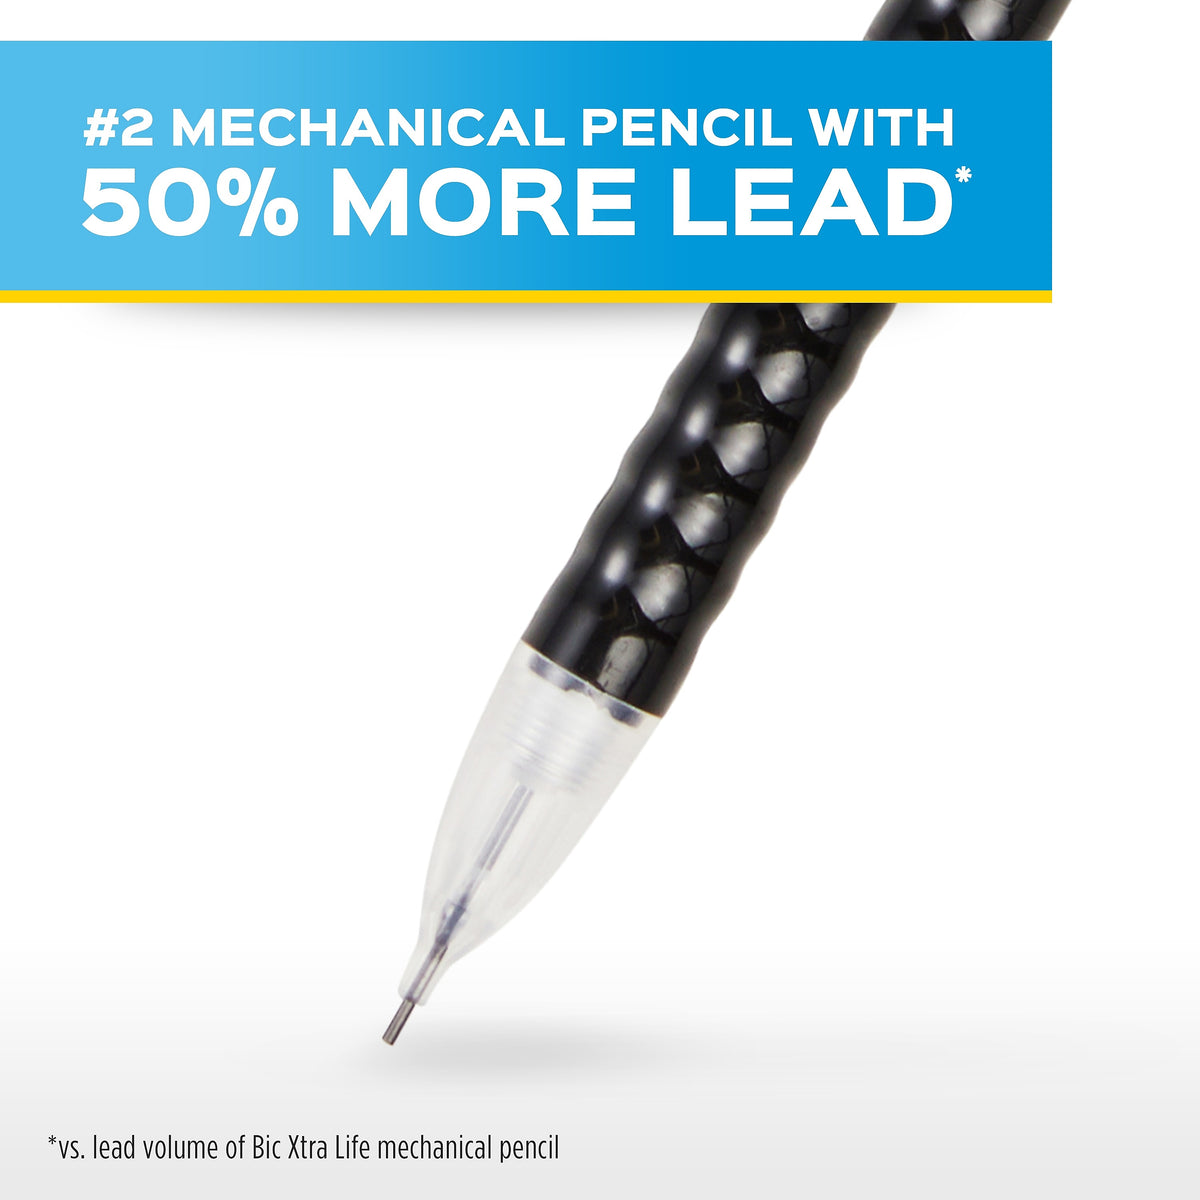 Paper Mate Write Bros. Classic Mechanical Pencil, 0.7mm, #2 Hard Lead, 2 Dozen